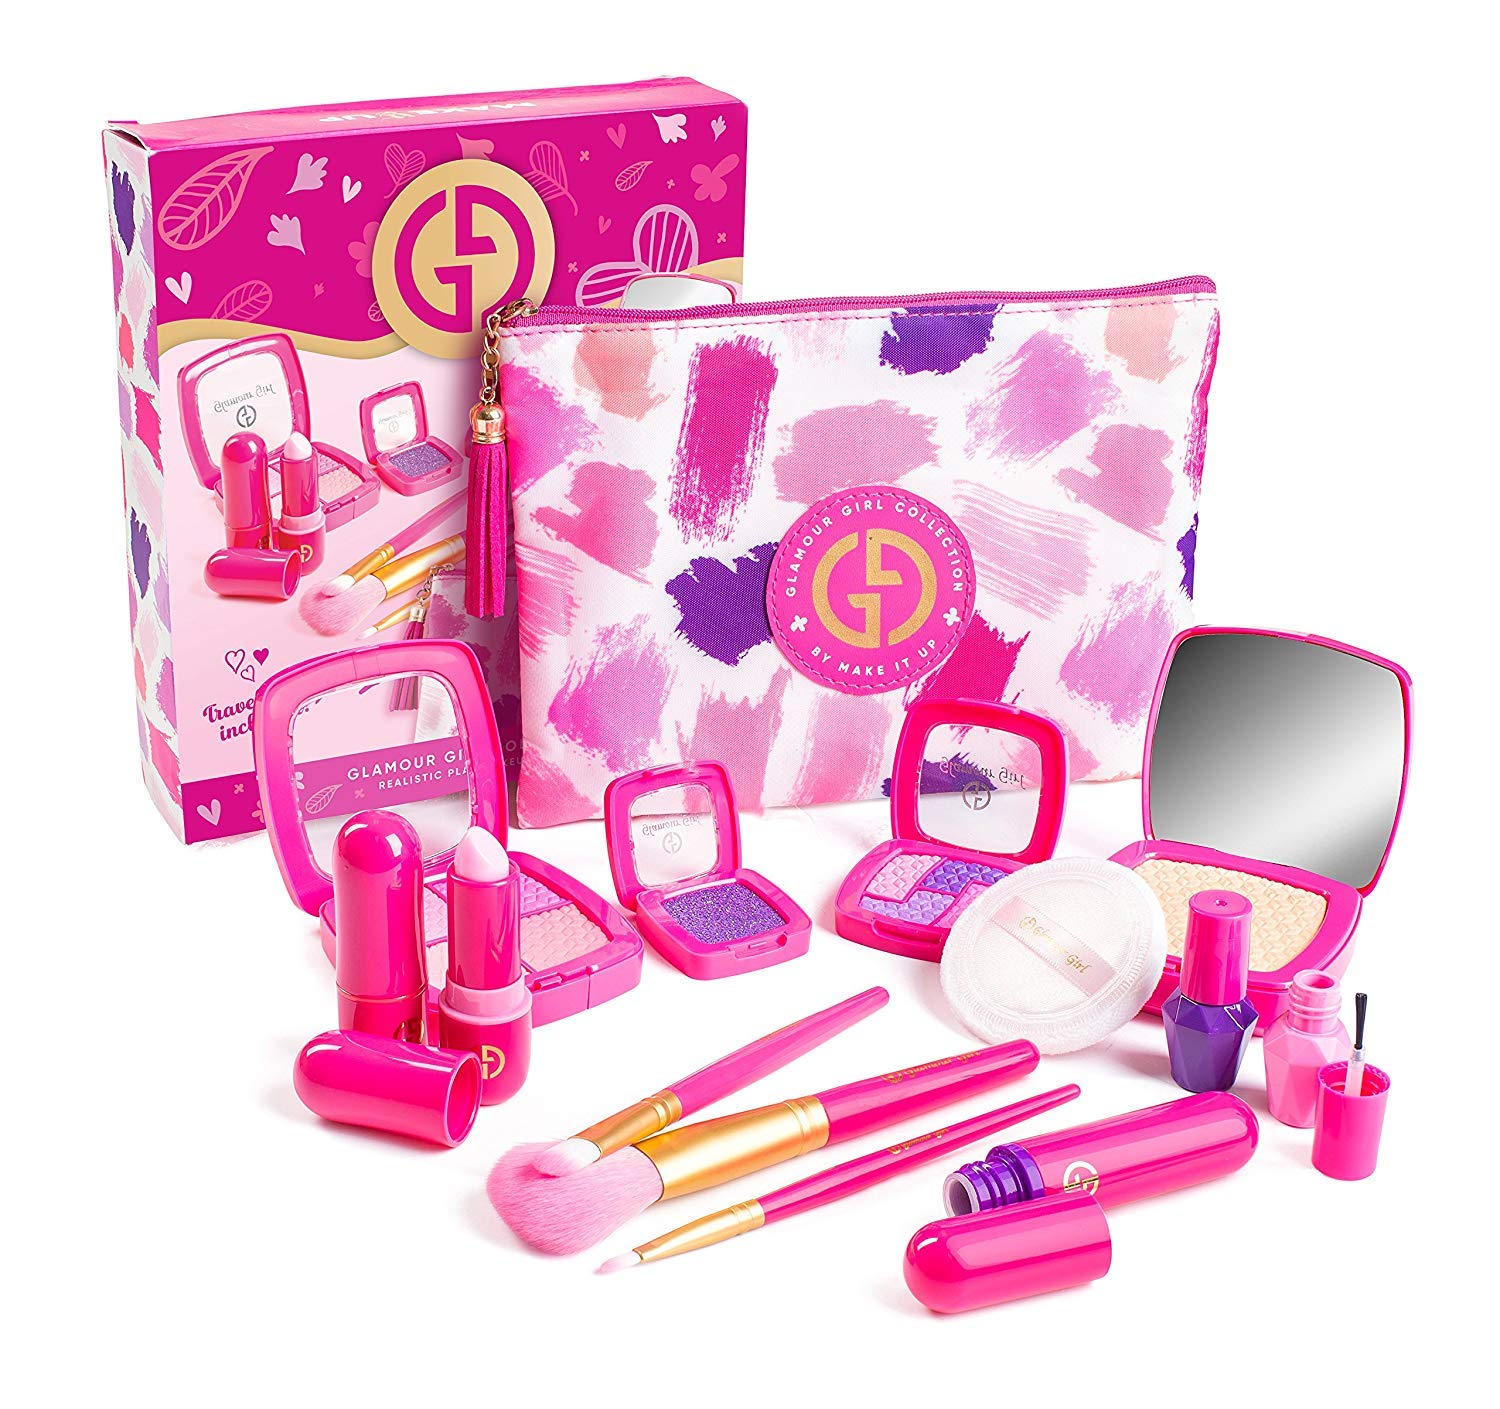 Make It Up Glamor Girl Pretend Play Makeup Set -Best Makeup Kits for Kids